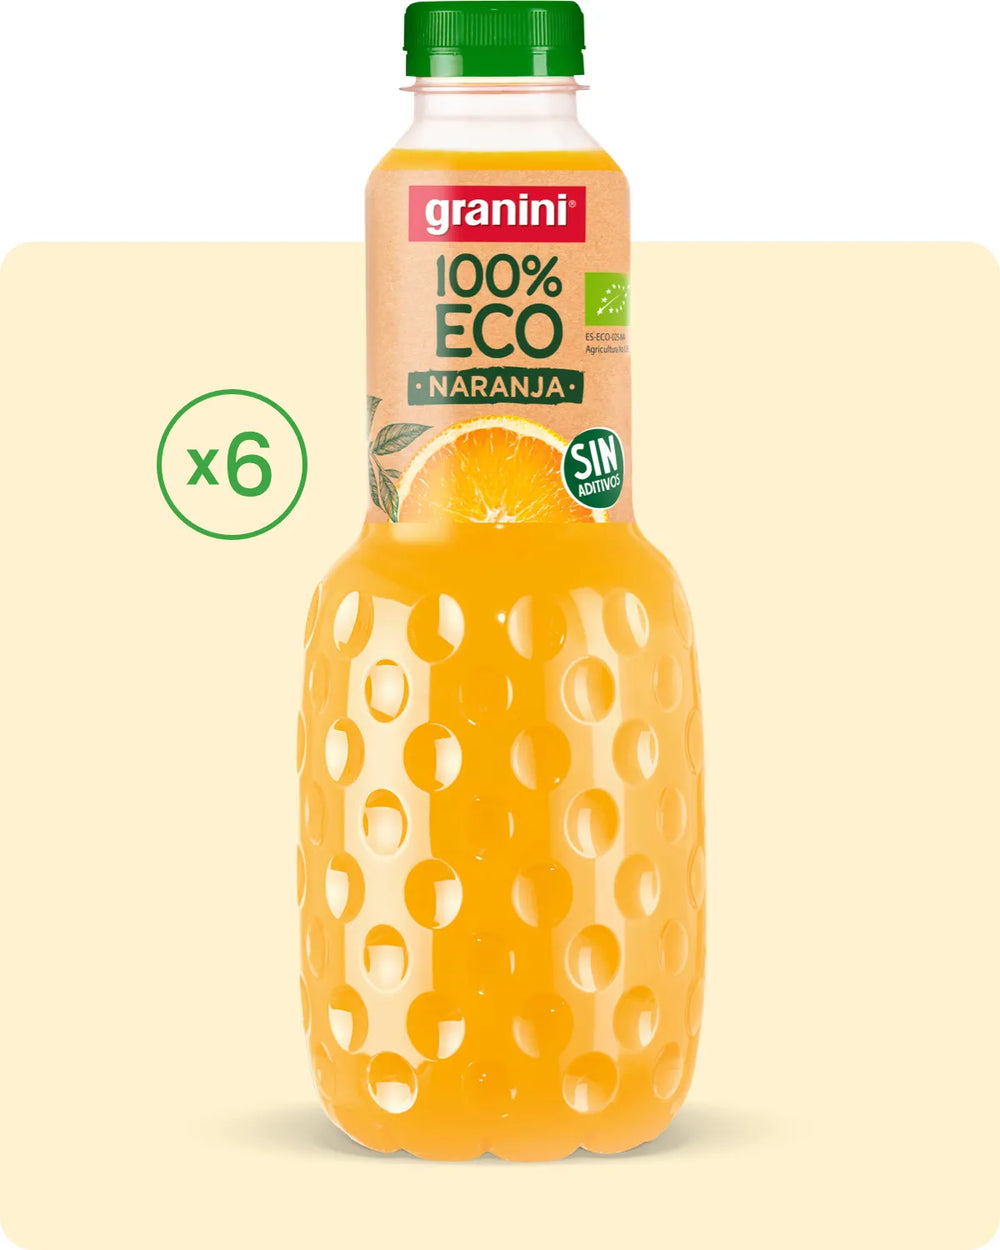 Naranja - 100% ECO - Pack 6 (6x1L)